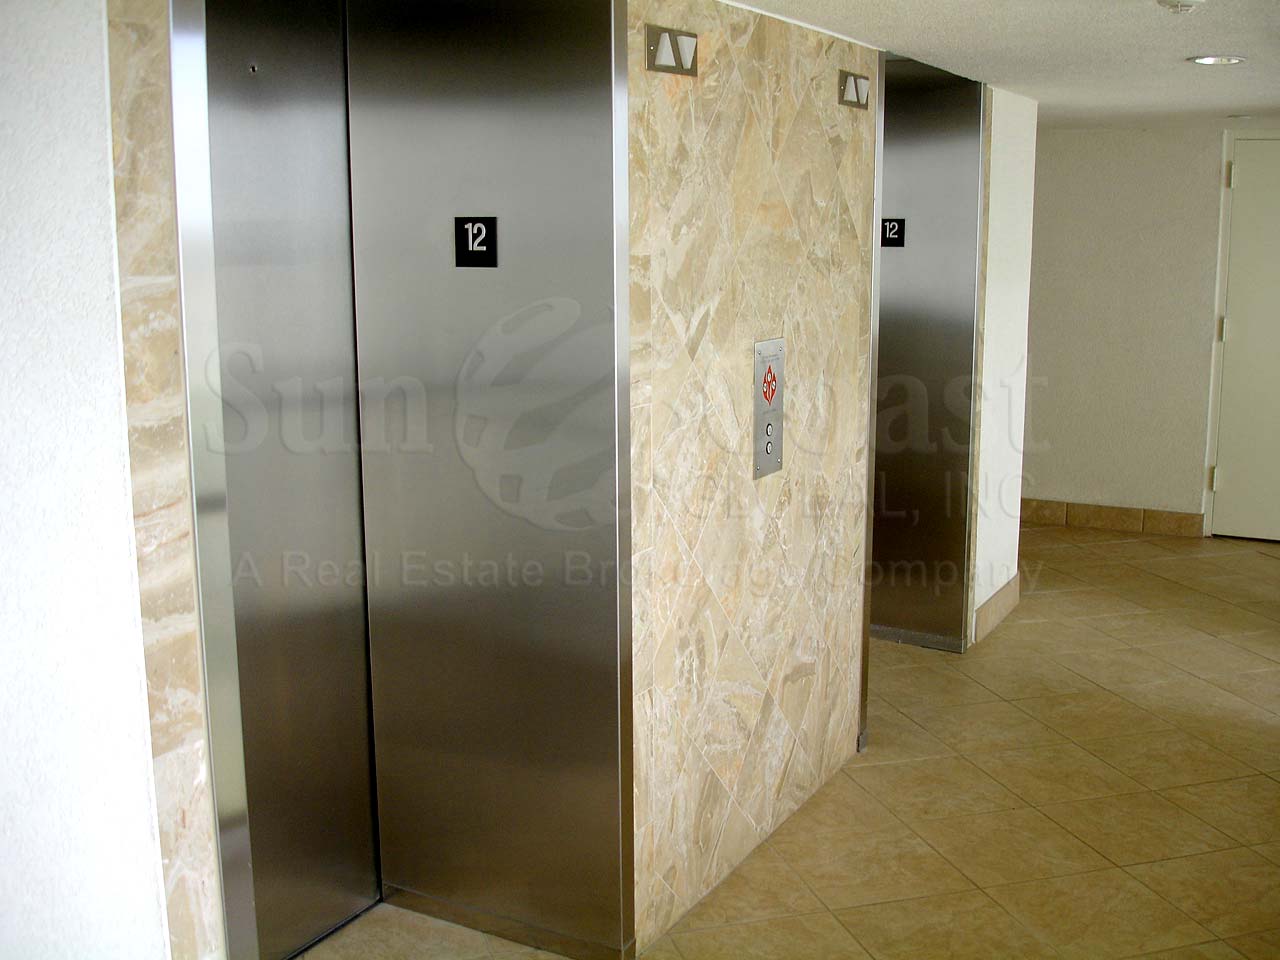 Park Shore Tower Elevator